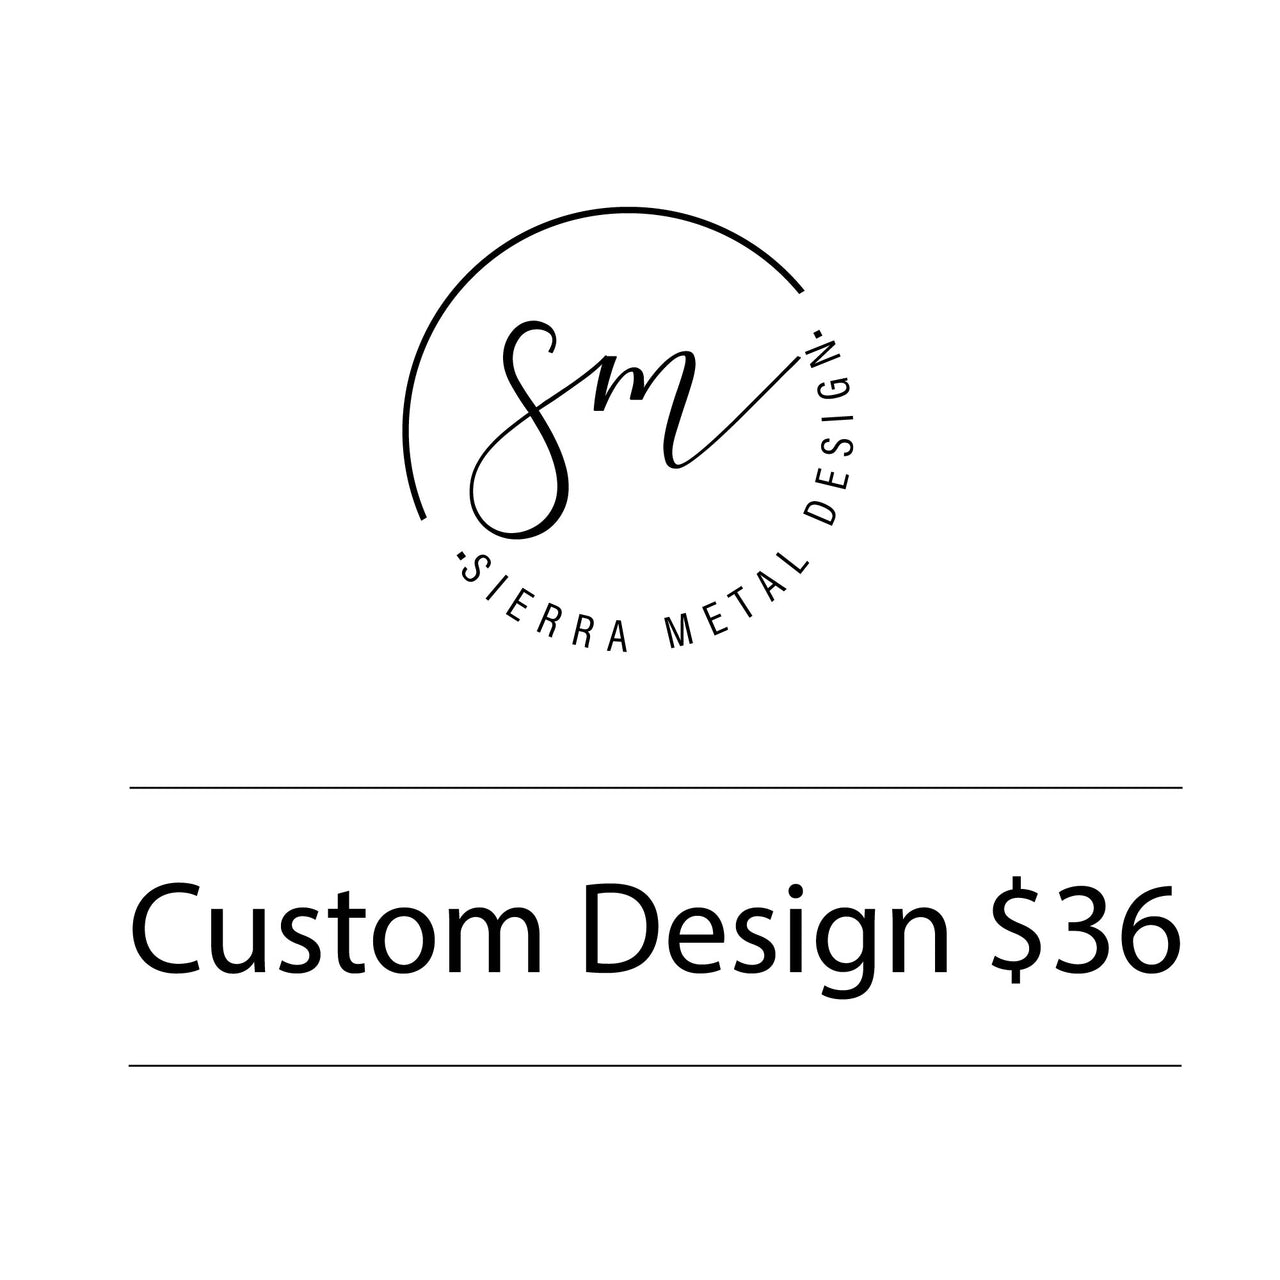 Custom Design $36